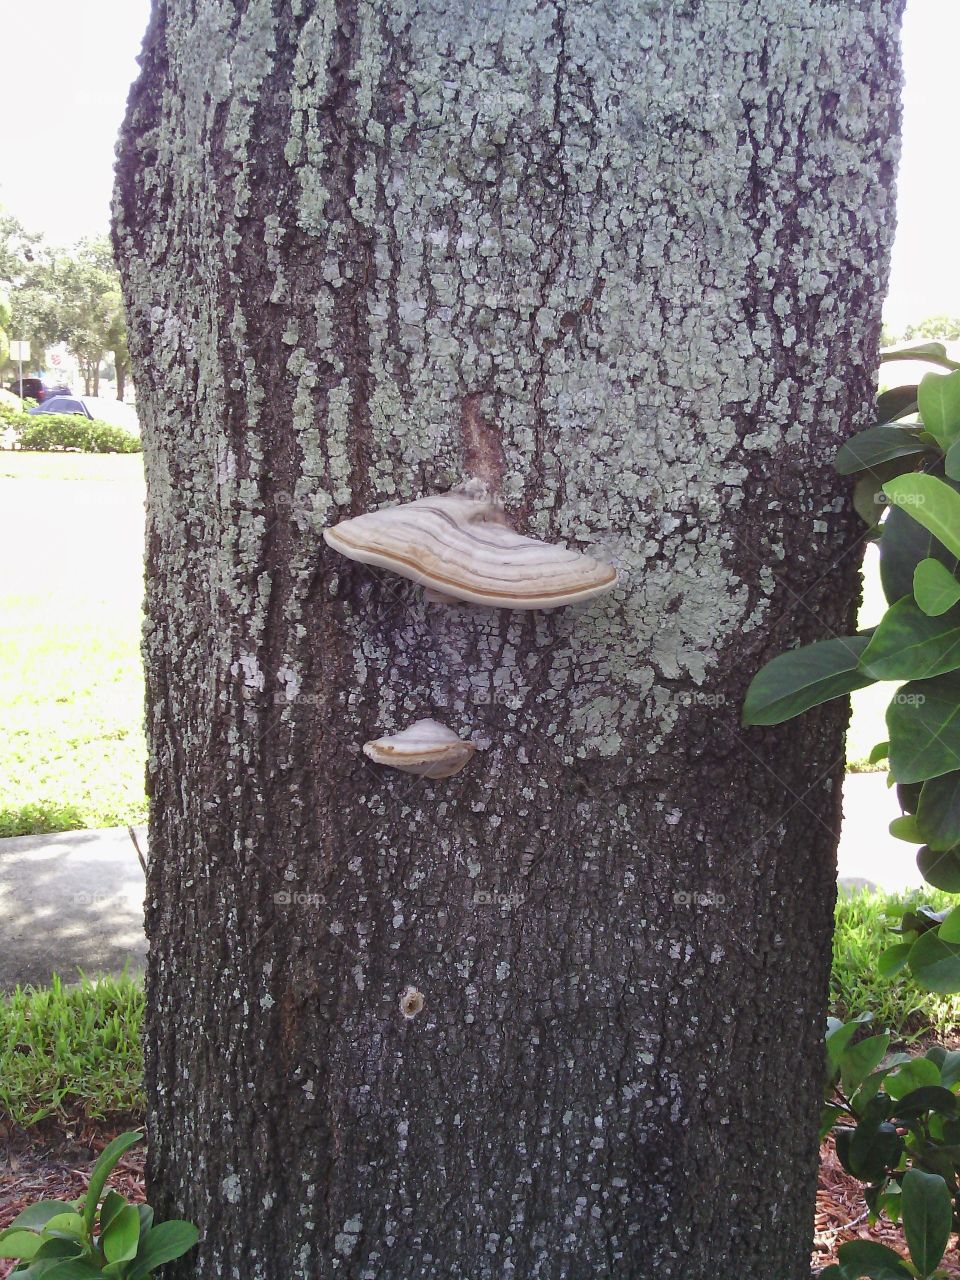 shelf fungus on an oak tree